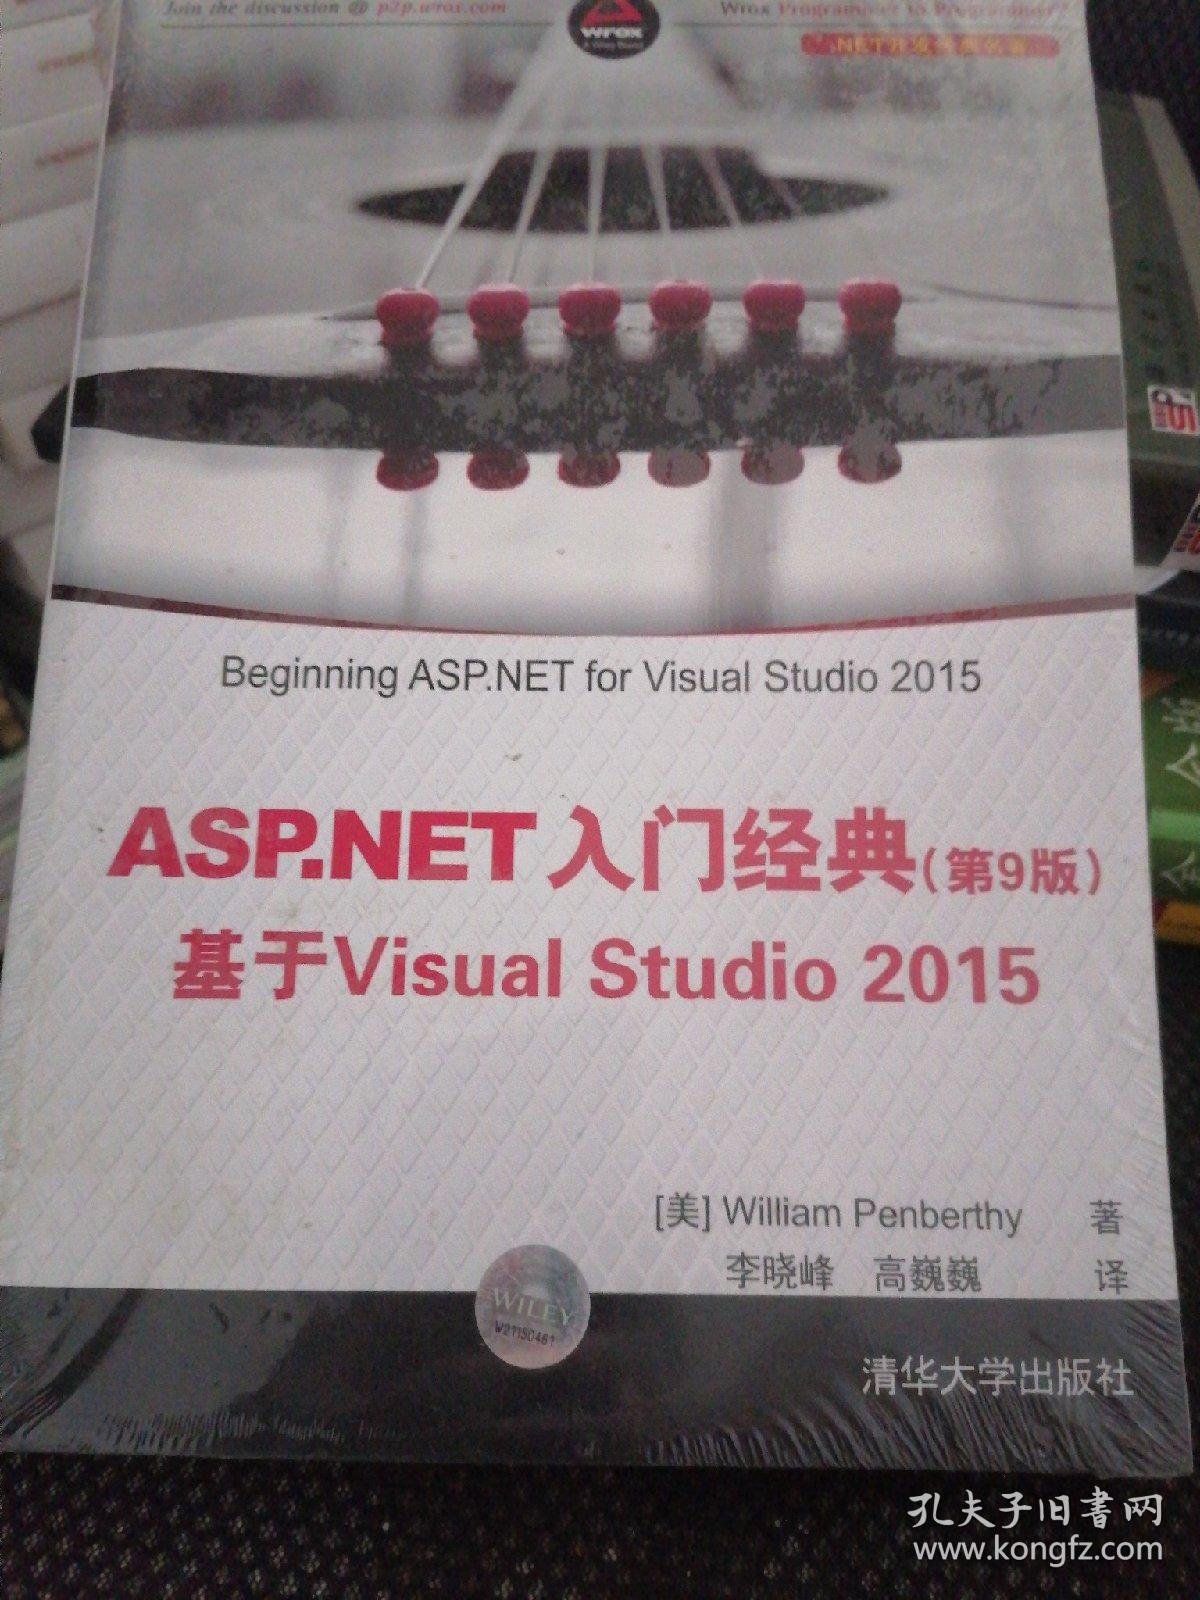 ASP.NET 入门经典(第9版) 基于Visual Studio 2015（.NET开发经典名著）